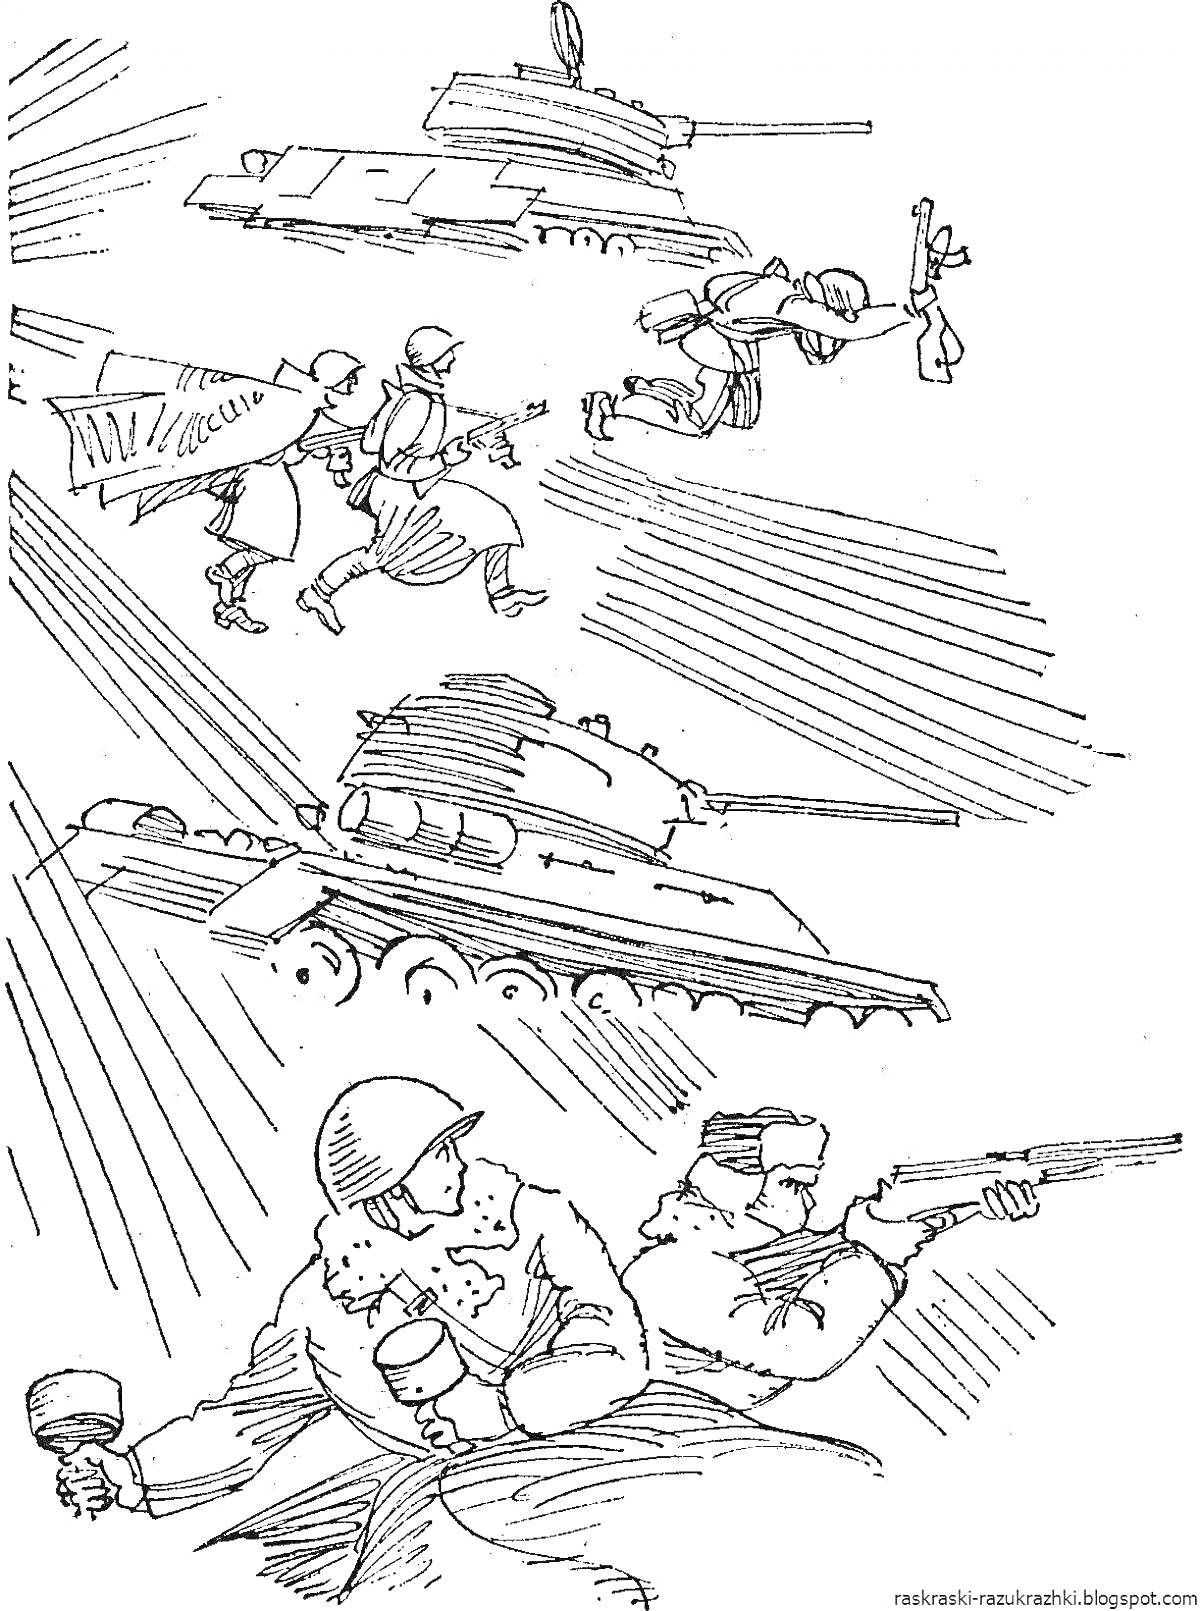 Раскраска Атака нацистских позиций: танки, солдаты с винтовками и гранатами